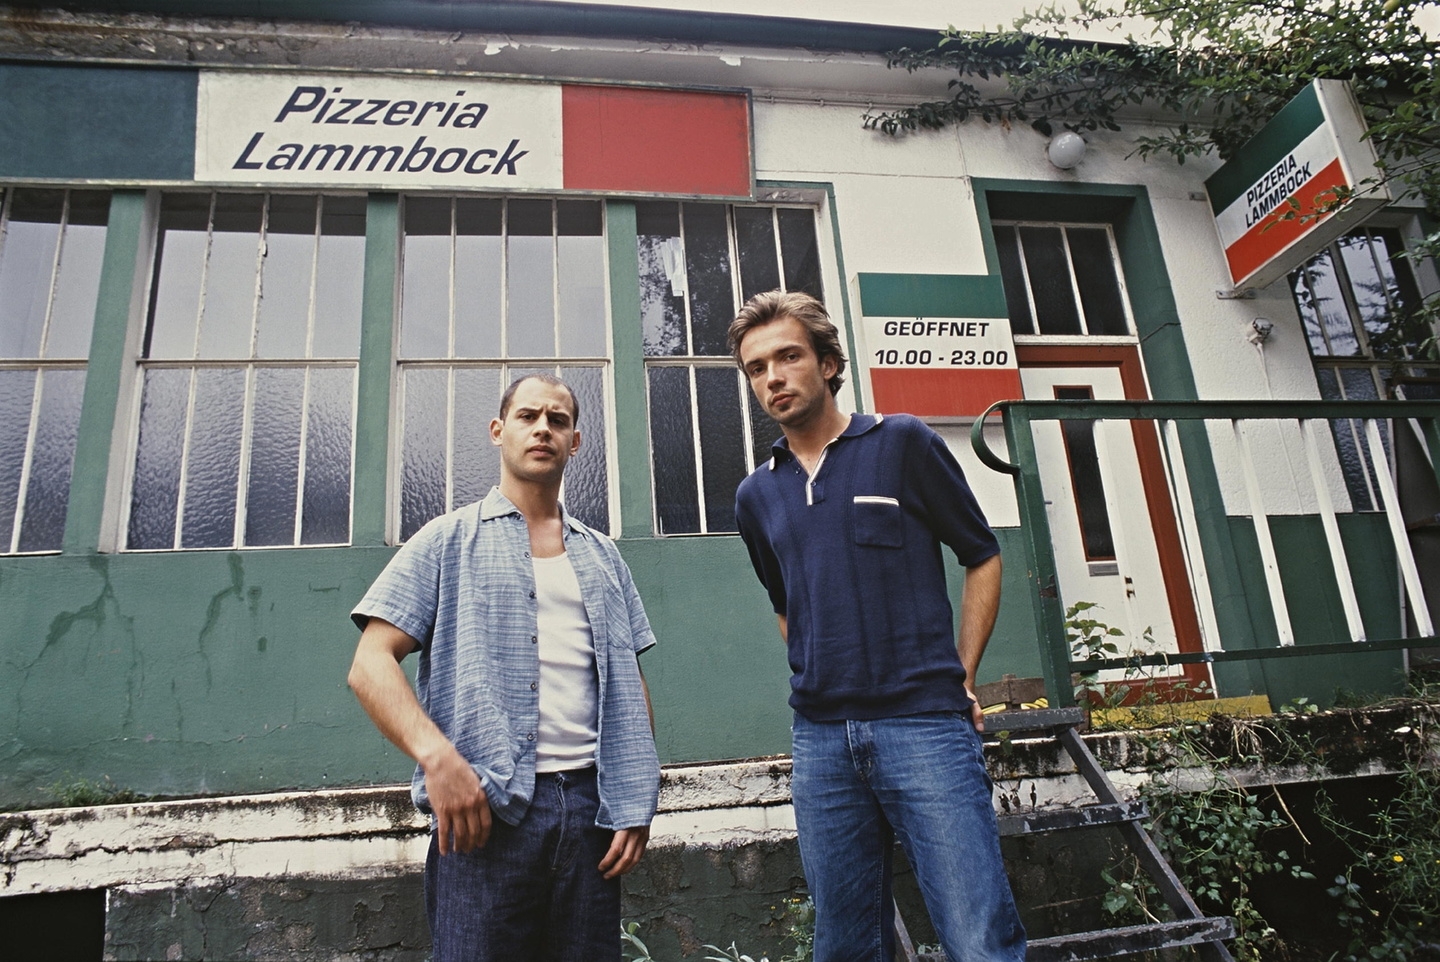 Lammbock / Moritz Bleibtreu